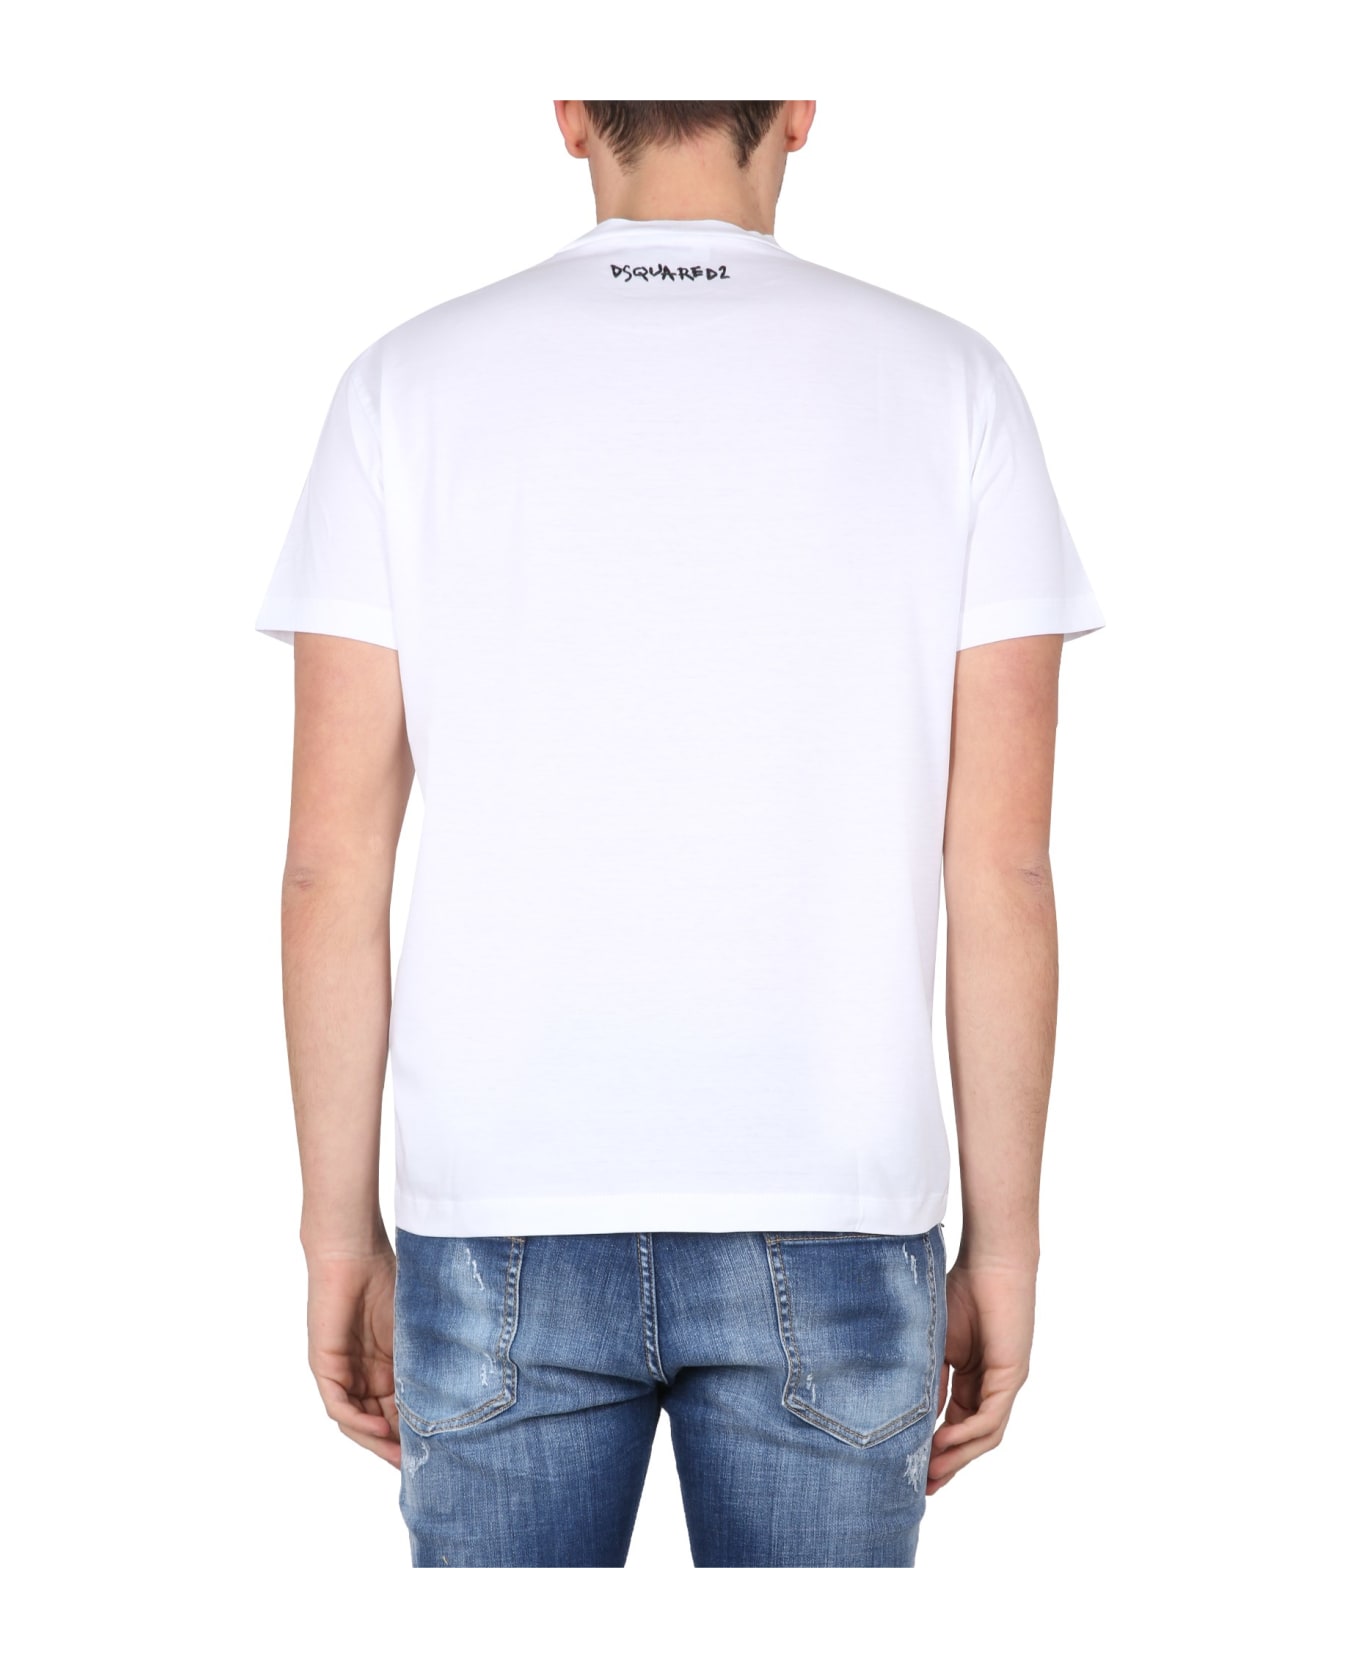 Dsquared2 White Cotton T-shirt - Bianco